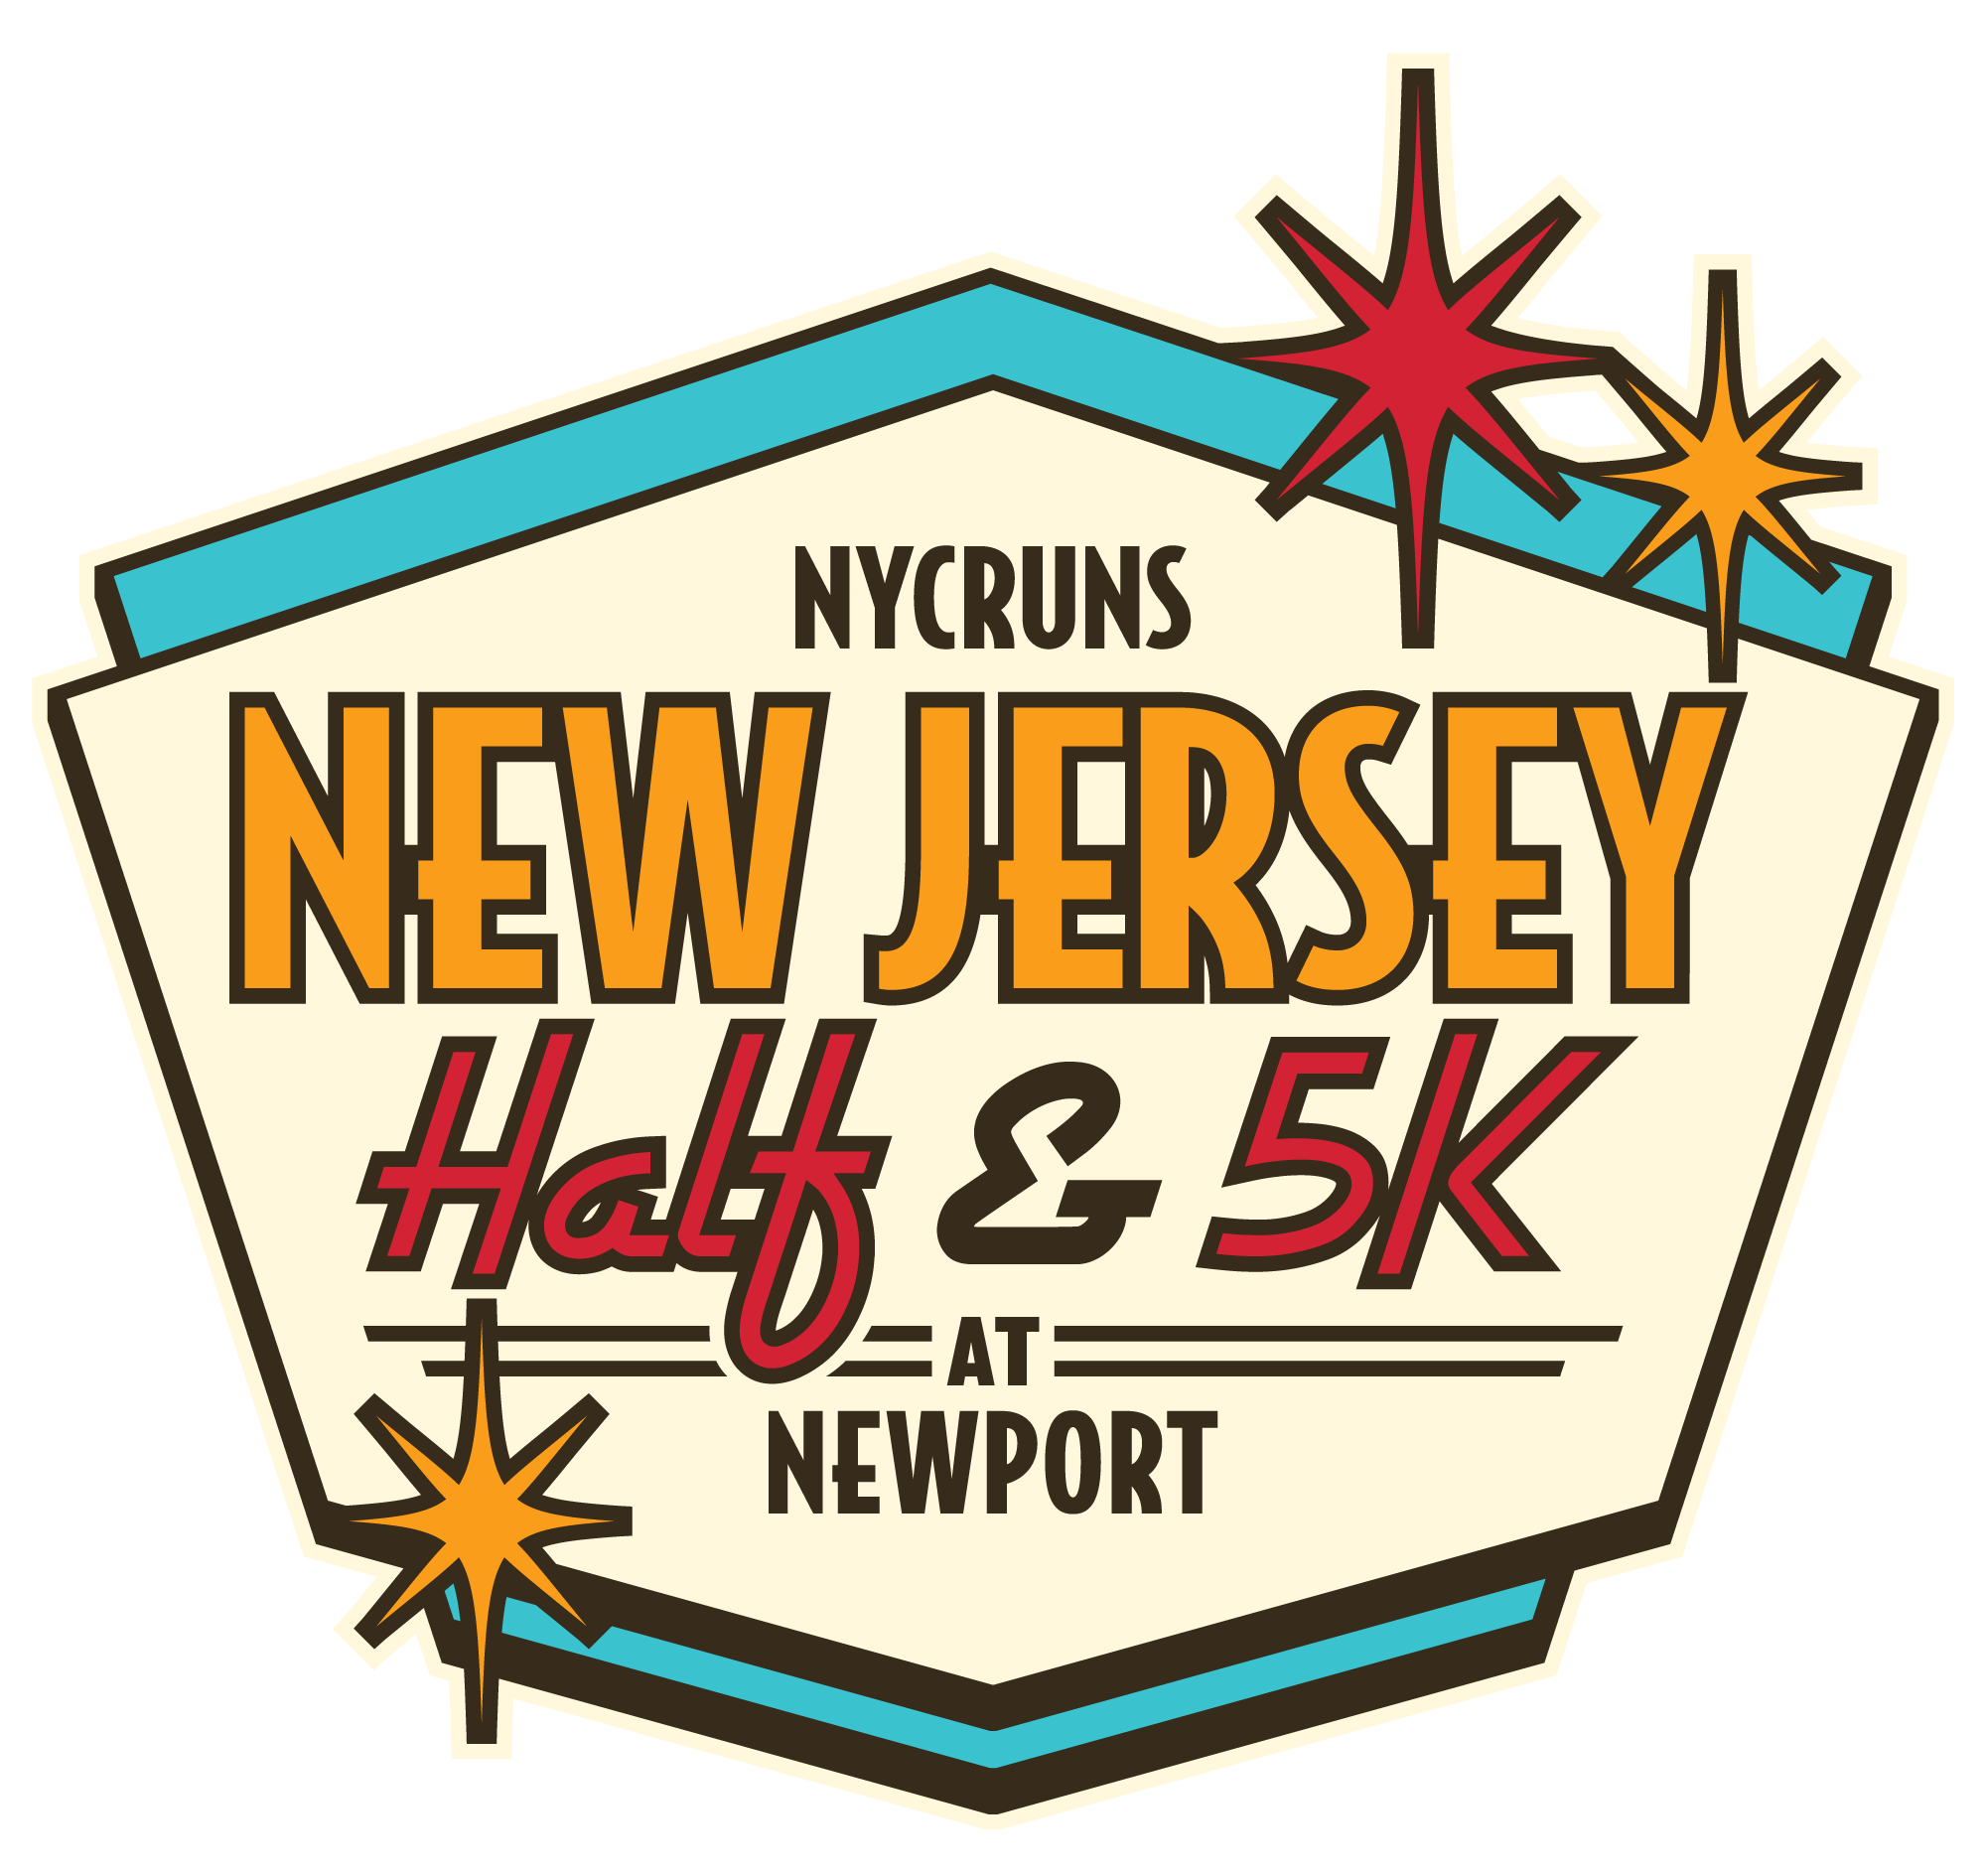 New Jersey Half Marathon & 5K at Newport logo on RaceRaves